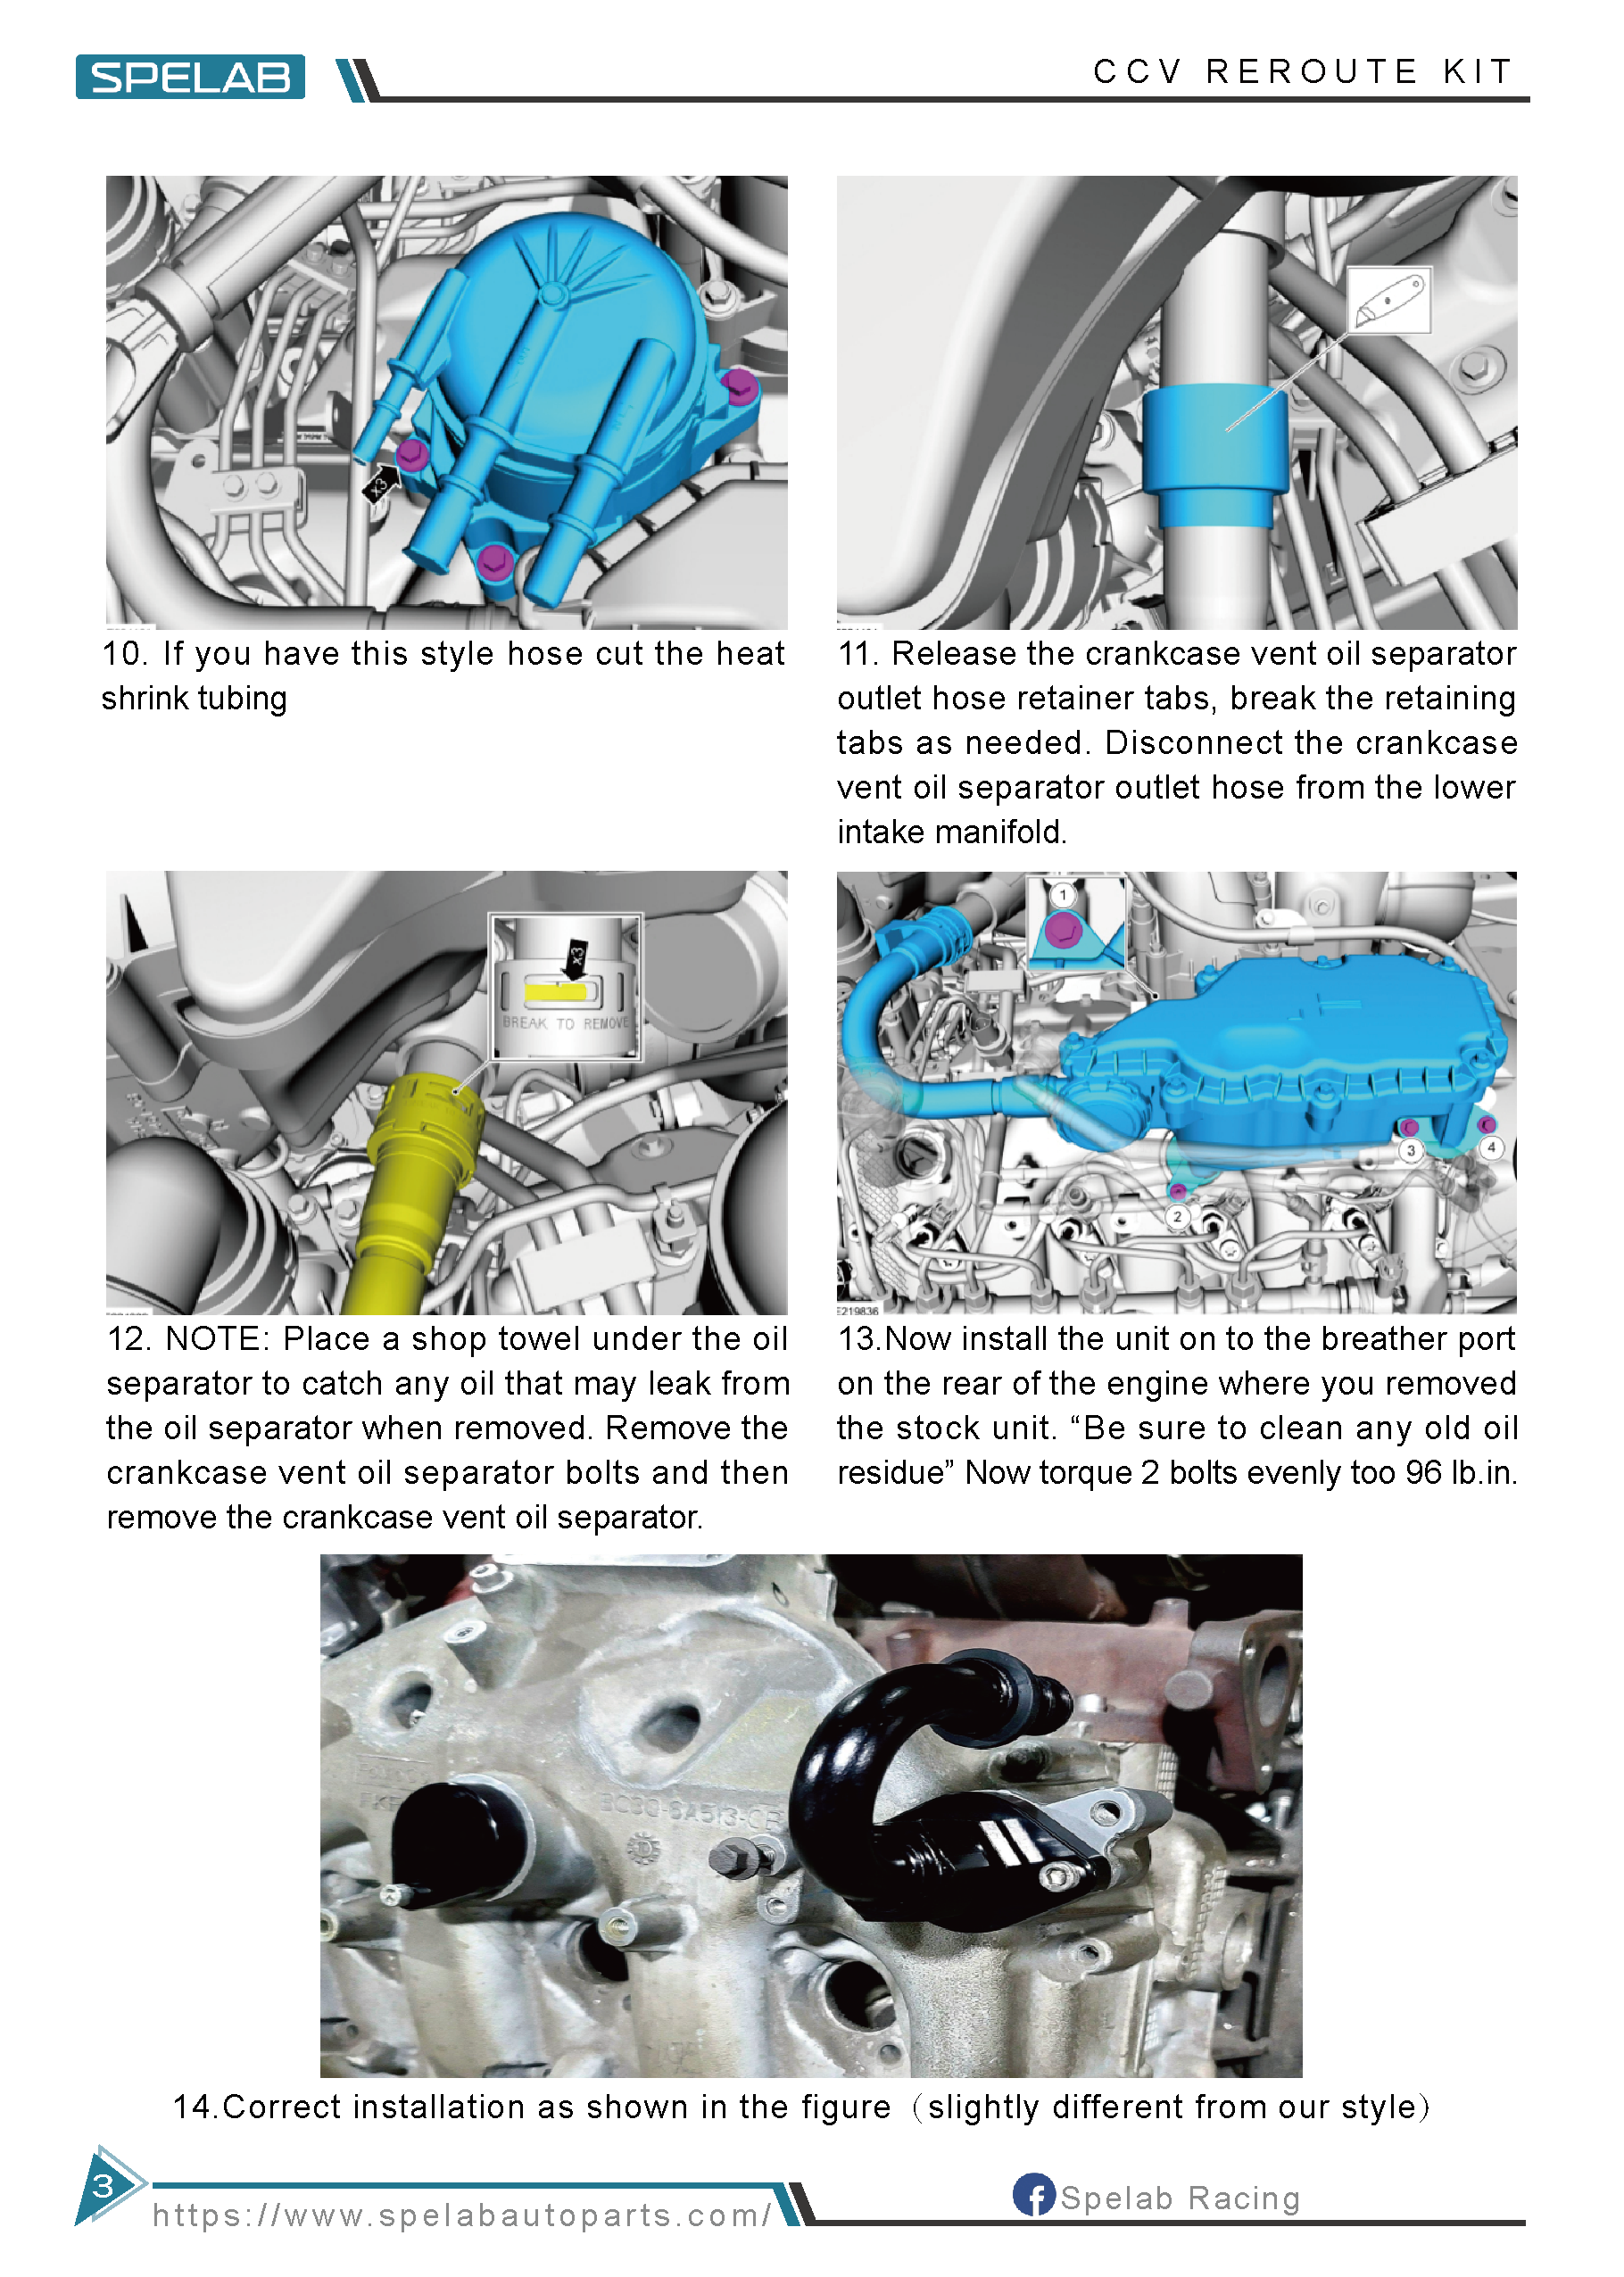 SPELAB 11-20 6.7L Powerstroke CCV ReRoute Kit Installtion Instruction 4